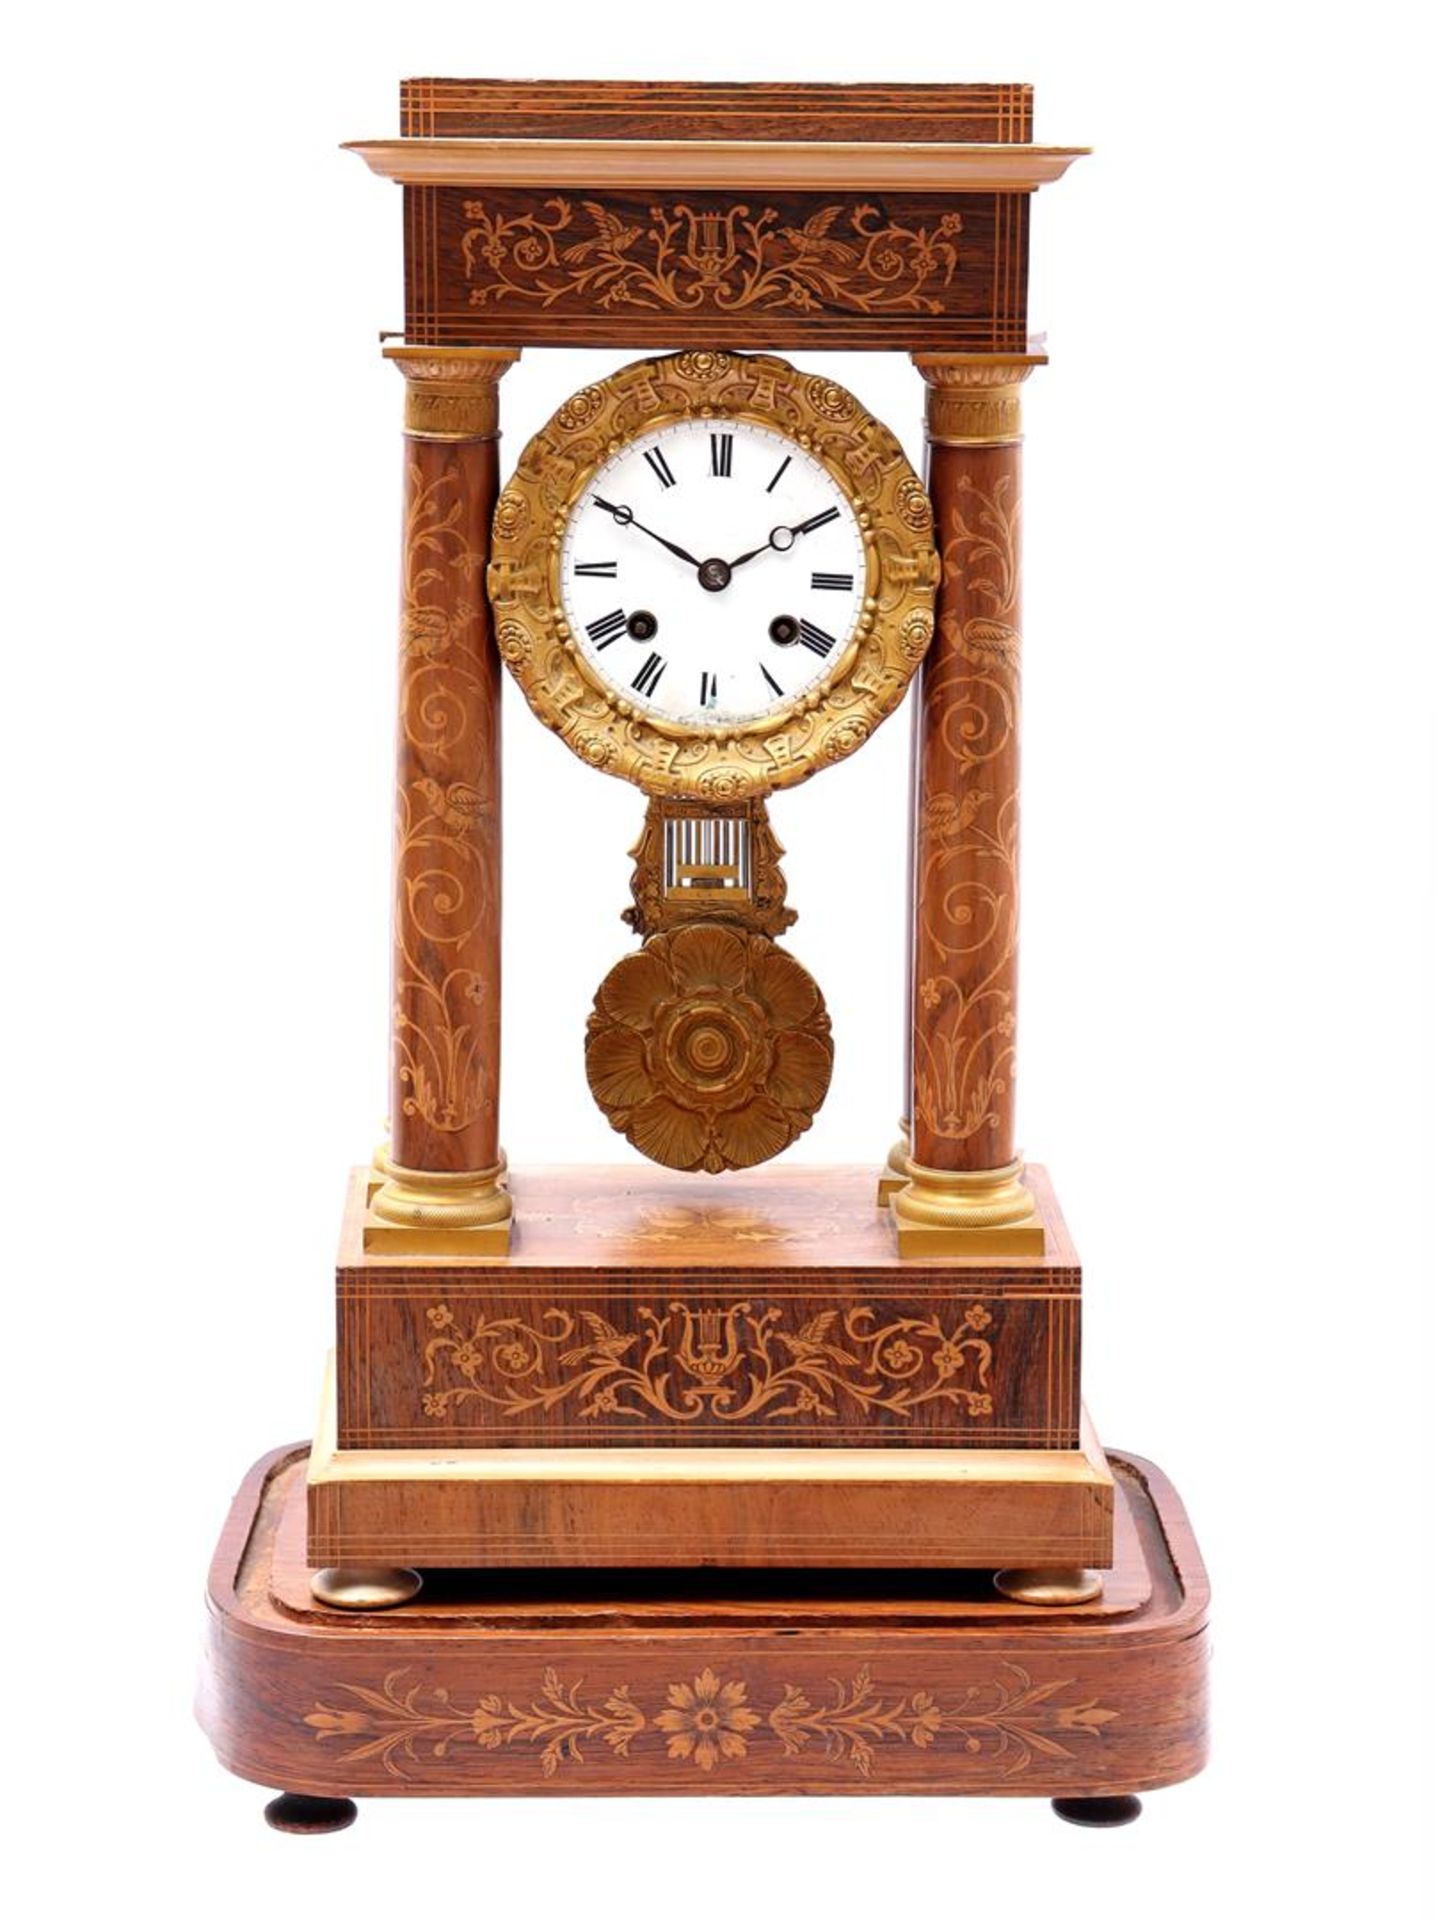 French Louis Philippe column mantel clock in rosewood veneer case